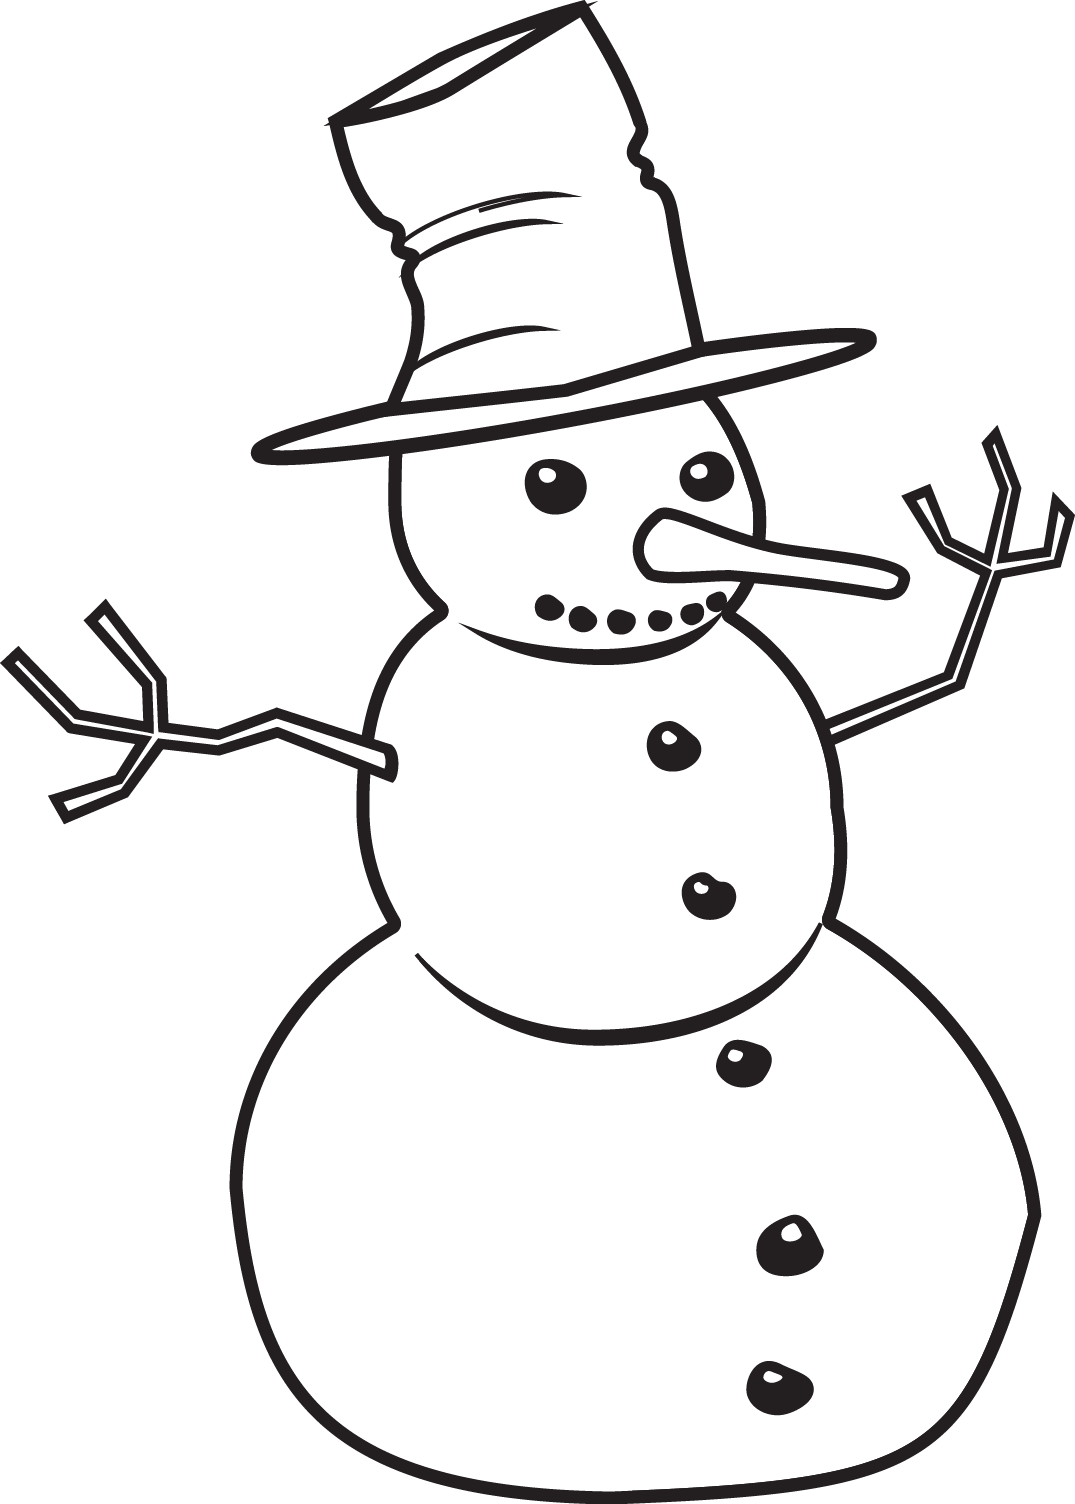 Classic Snowman Image - Snowman Black And White Clipart (1075x1504)